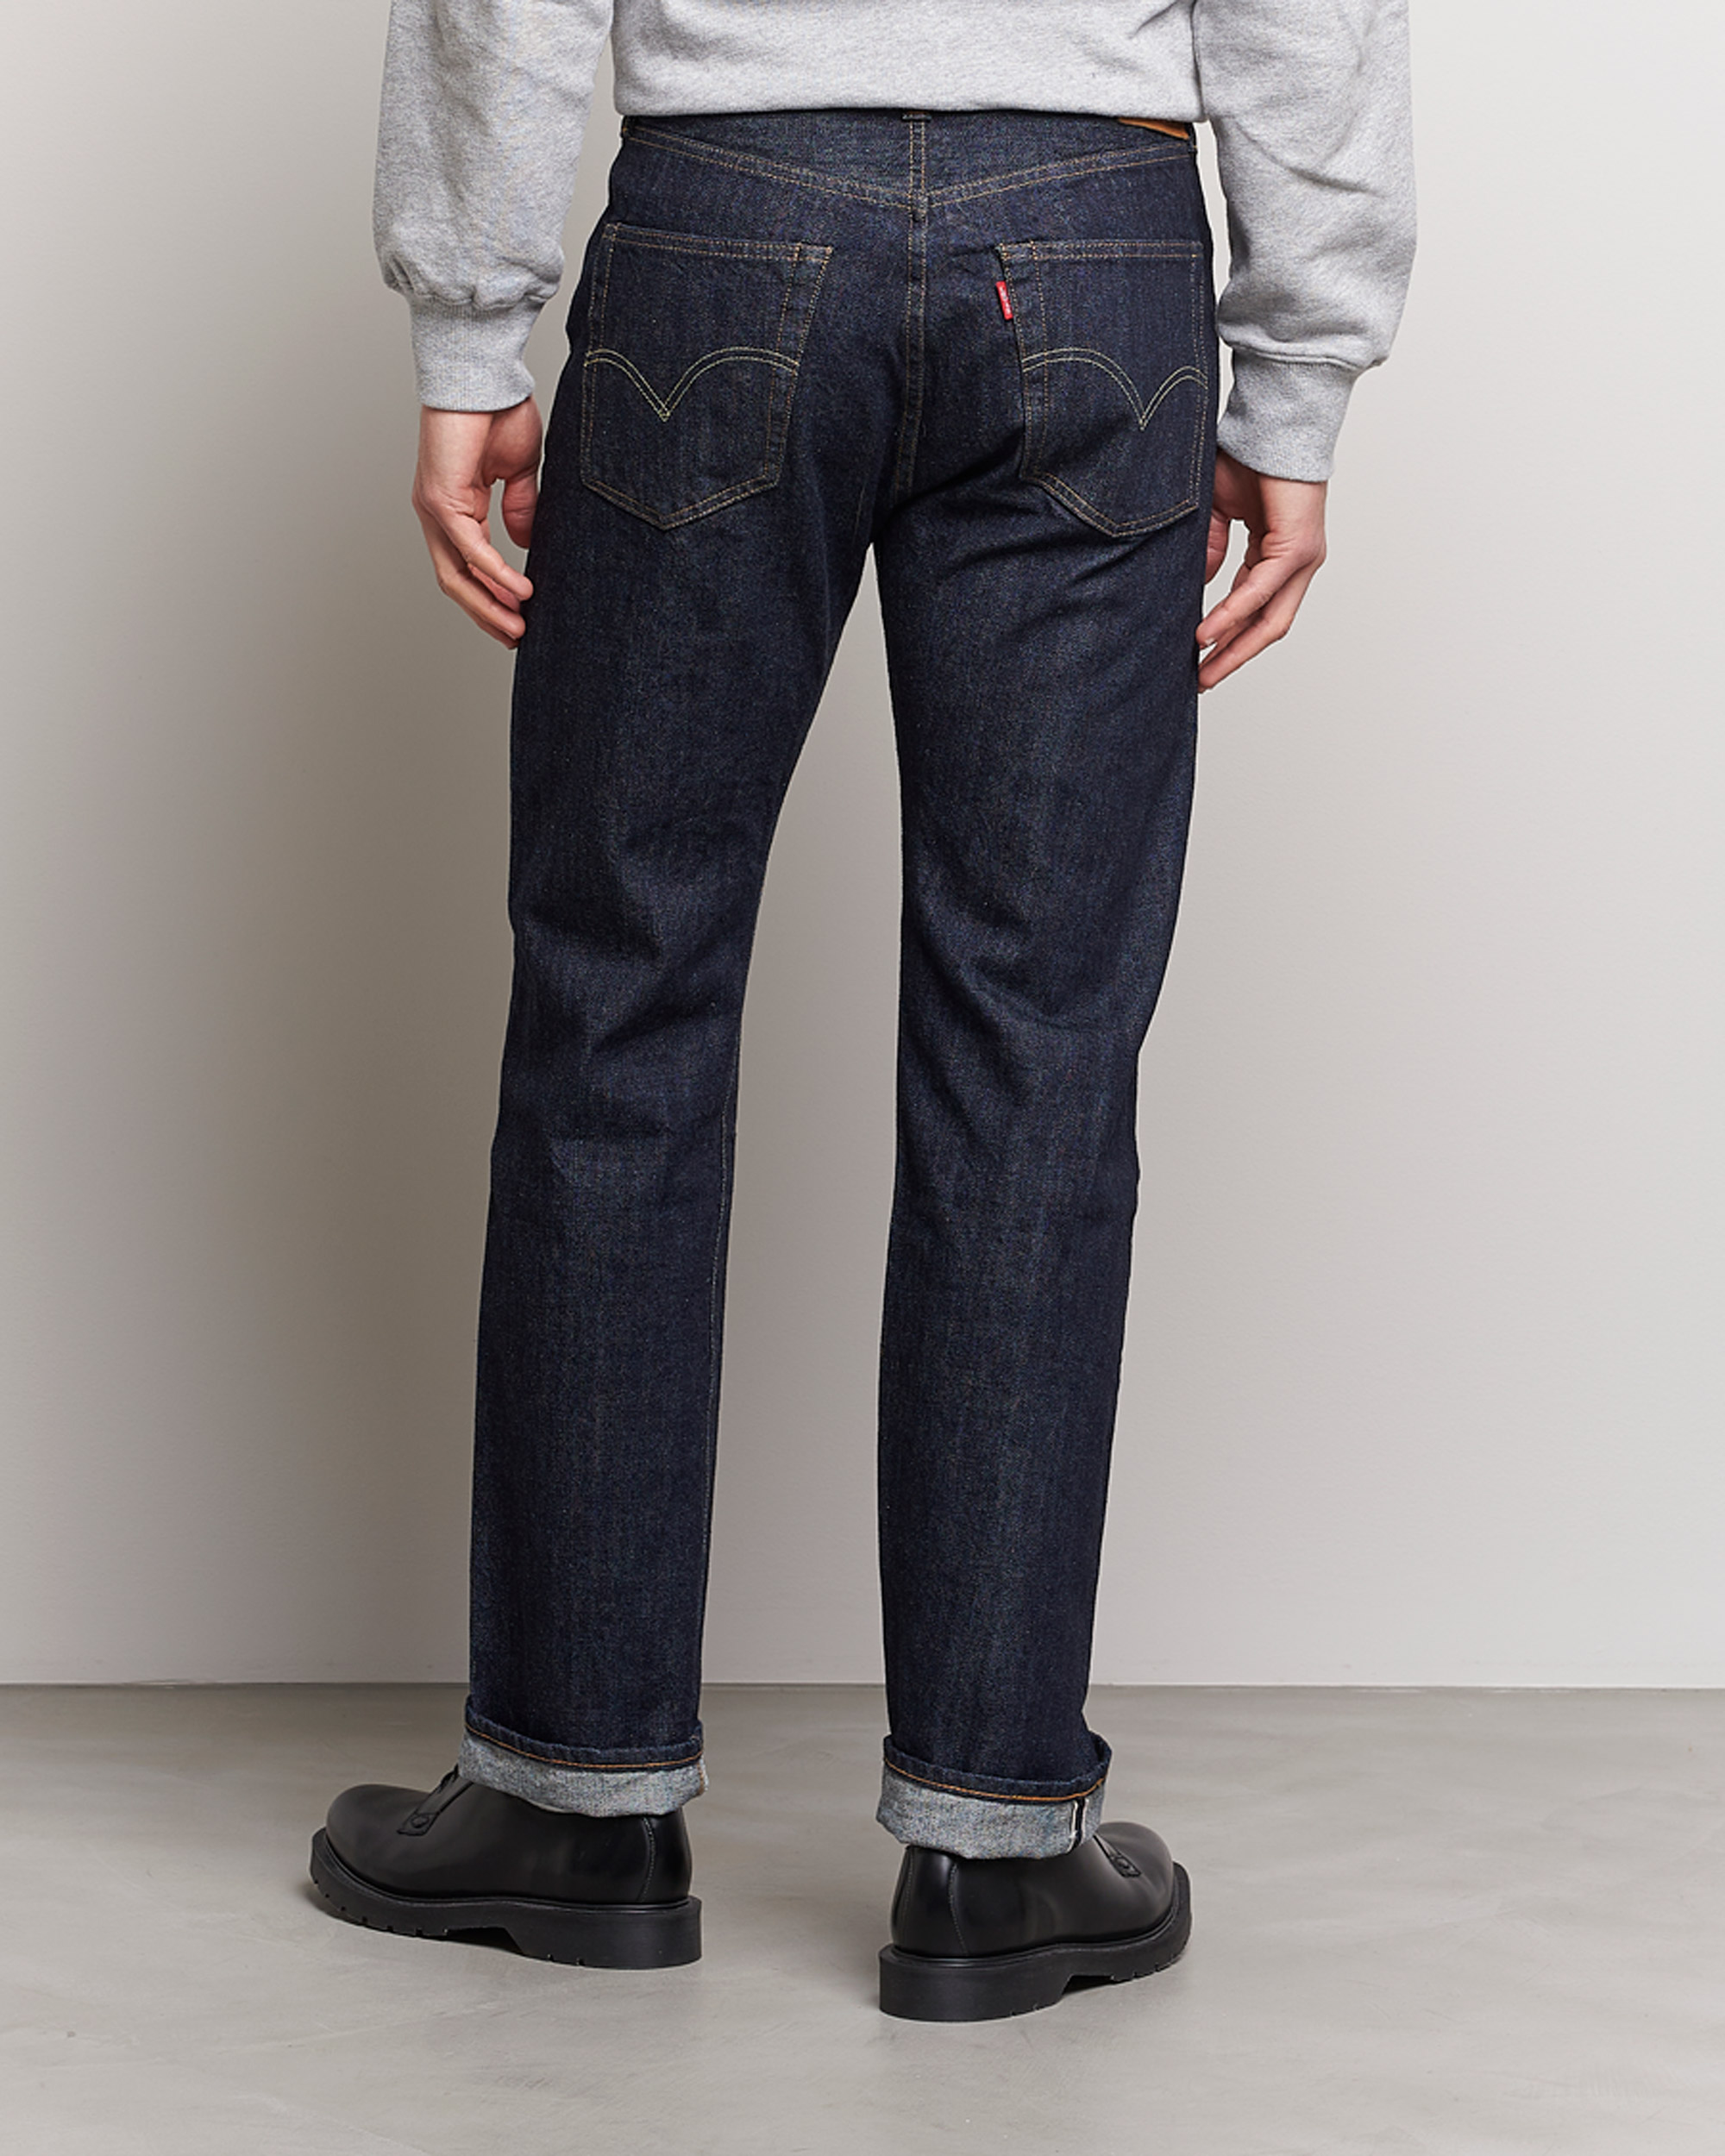 Levi's Vintage Clothing 1947 Straight Slim Fit 501 Selvedge Jeans